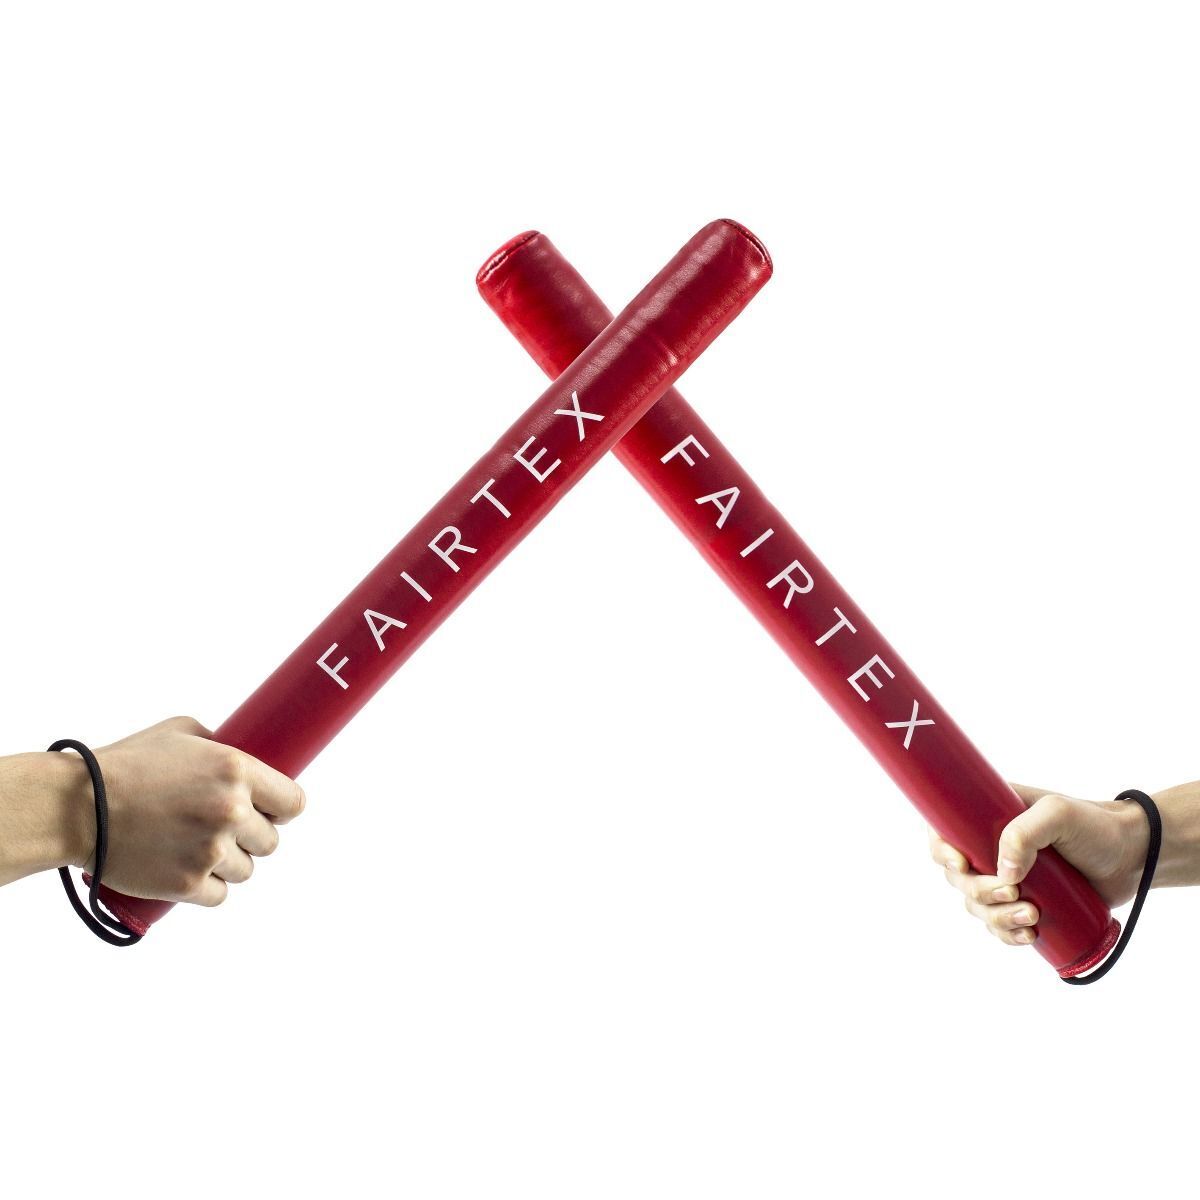 FAIRTEX - Boxing Stick (BXS1)